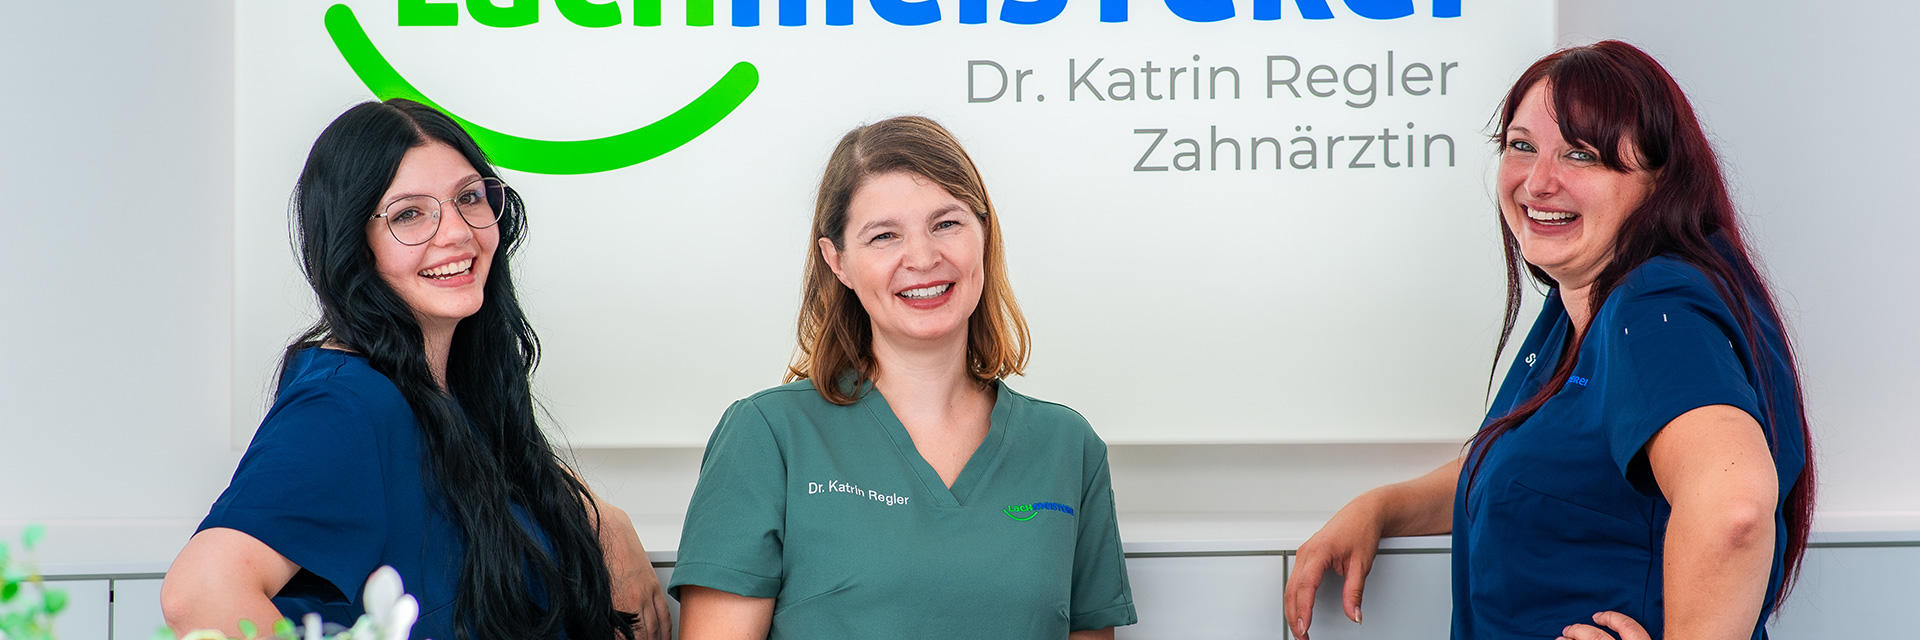 Kundenbild groß 9 Lachmeisterei - Dr. Katrin Regler Zahnarztpraxis